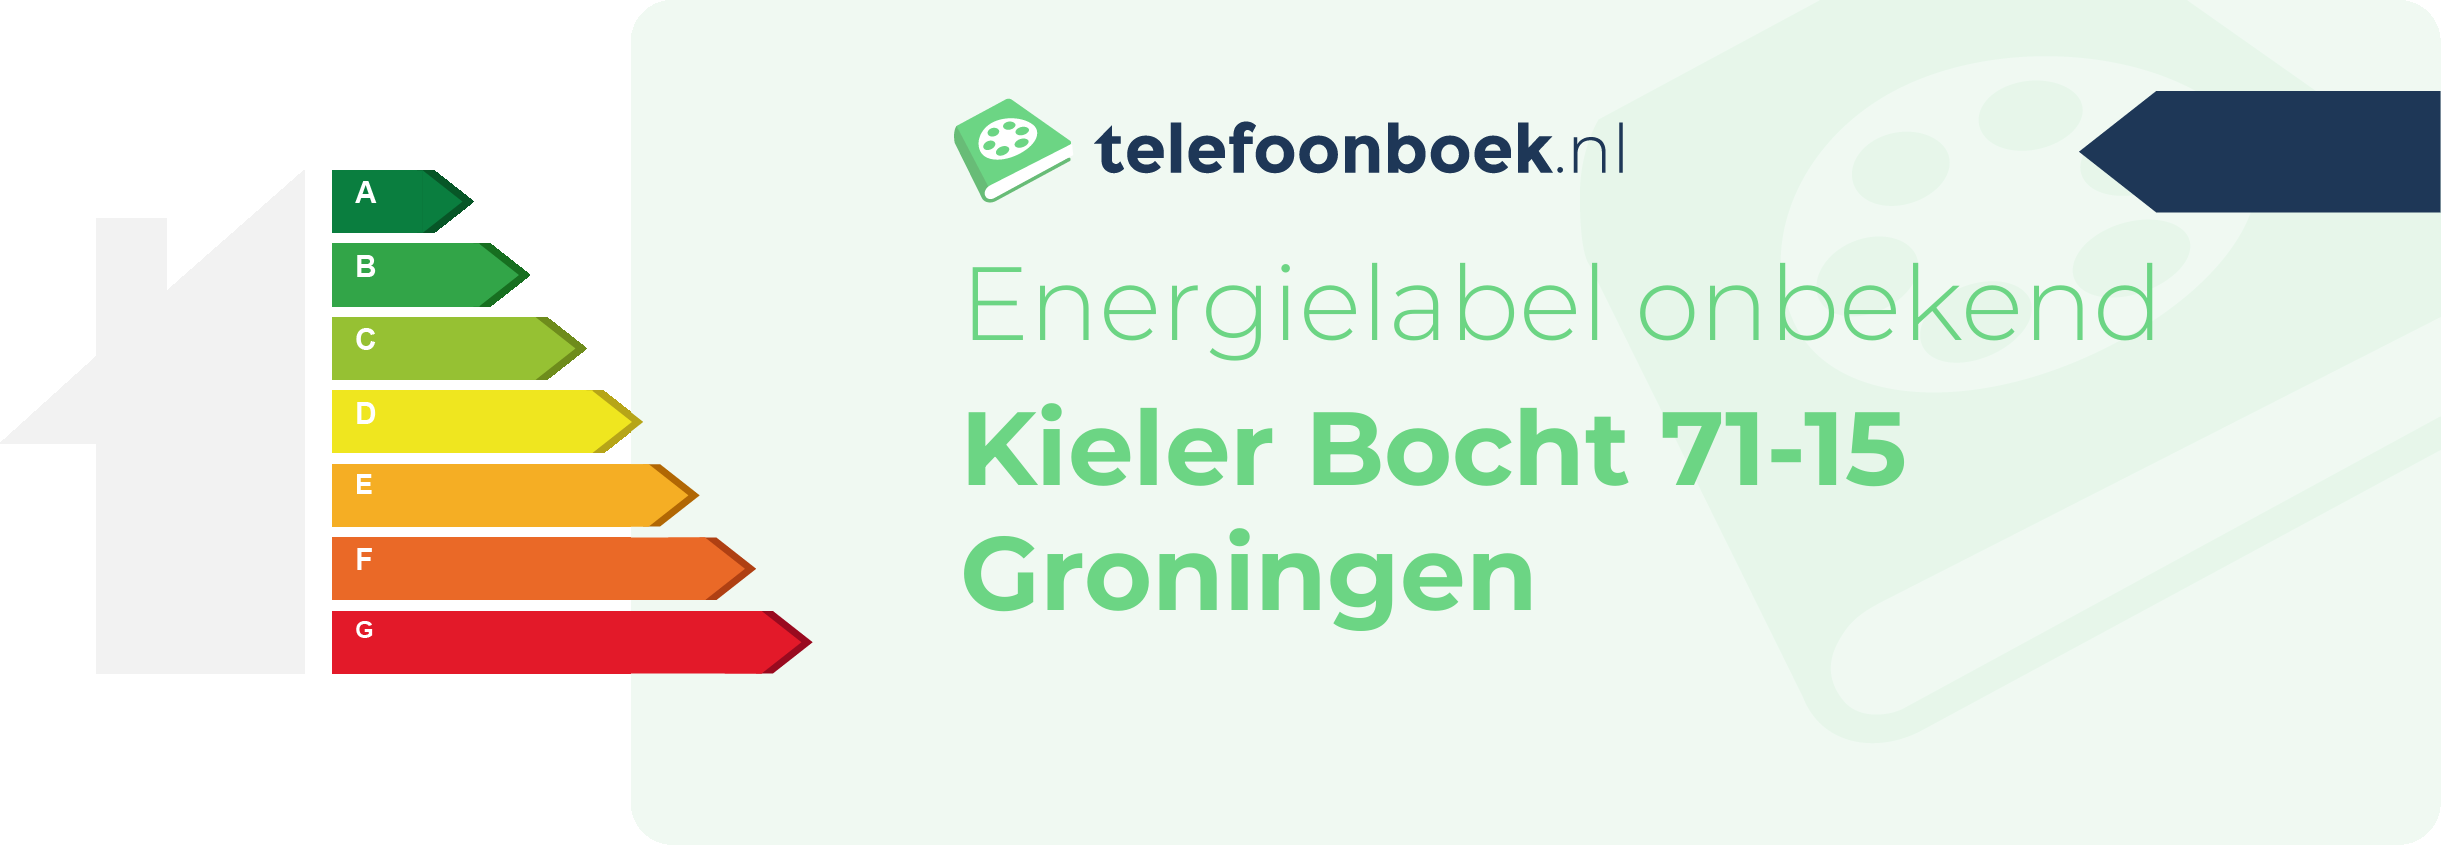 Energielabel Kieler Bocht 71-15 Groningen